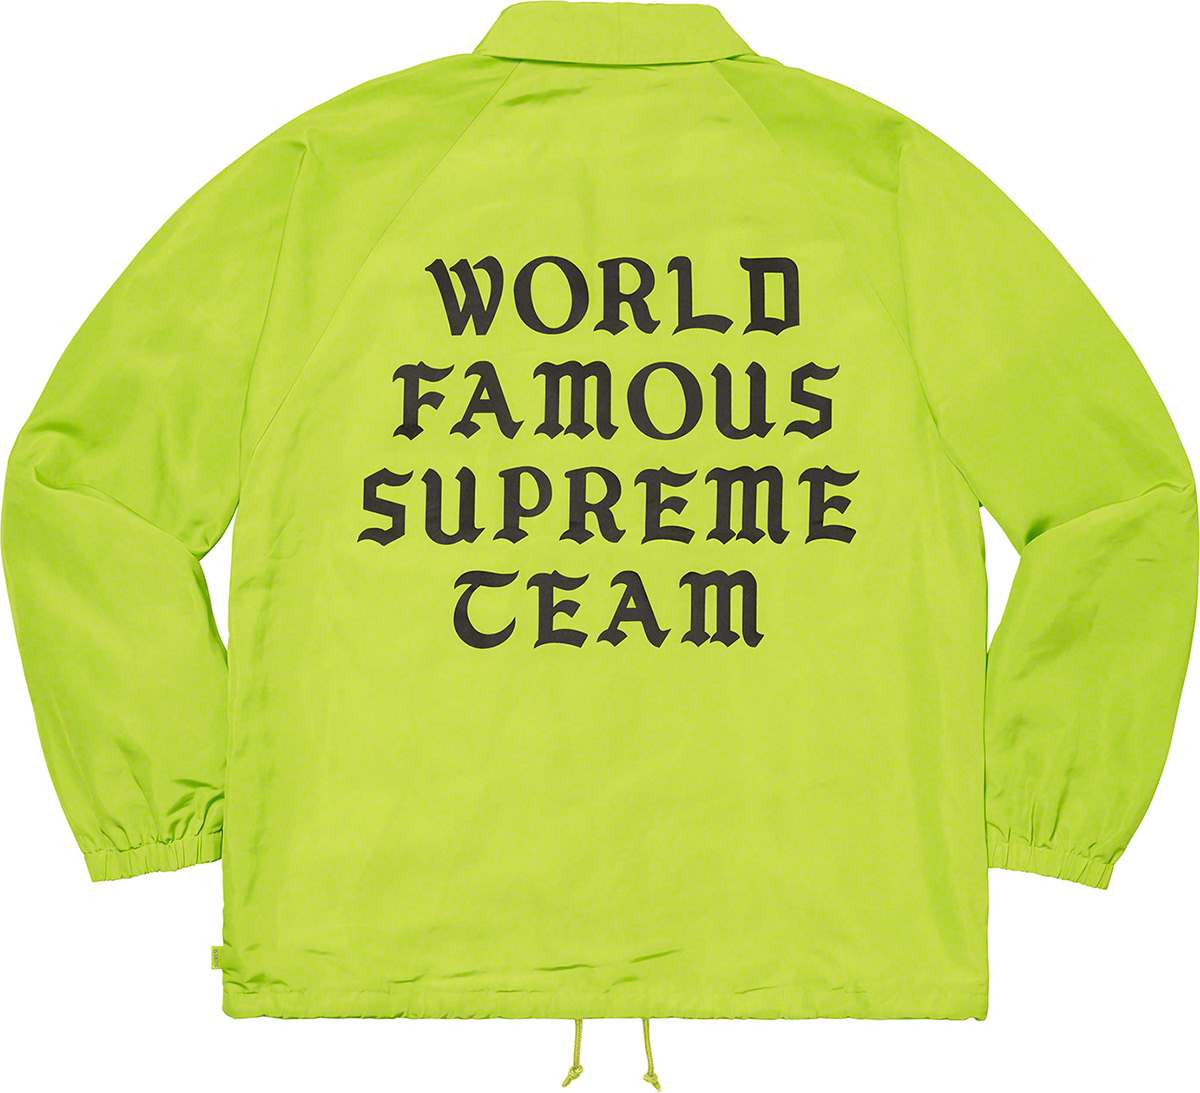 World Famous Supreme Ceam I mean Team (still a fire coaches